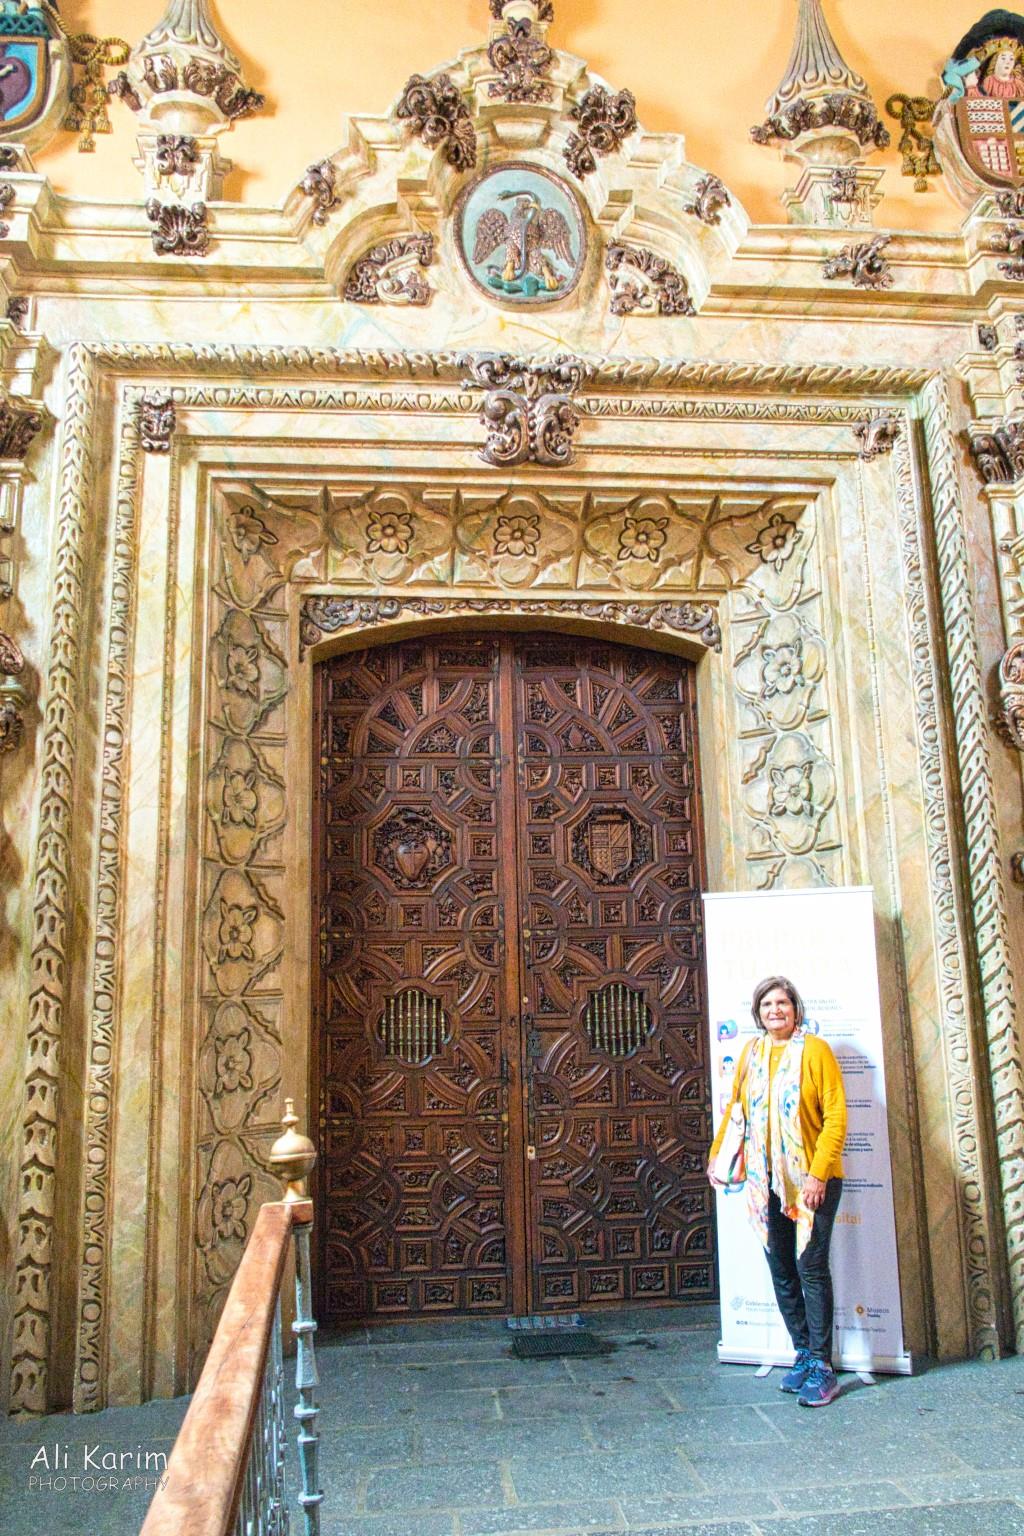 Puebla, Mexico Dec 2020, Ornate and beautiful architecture everywhere